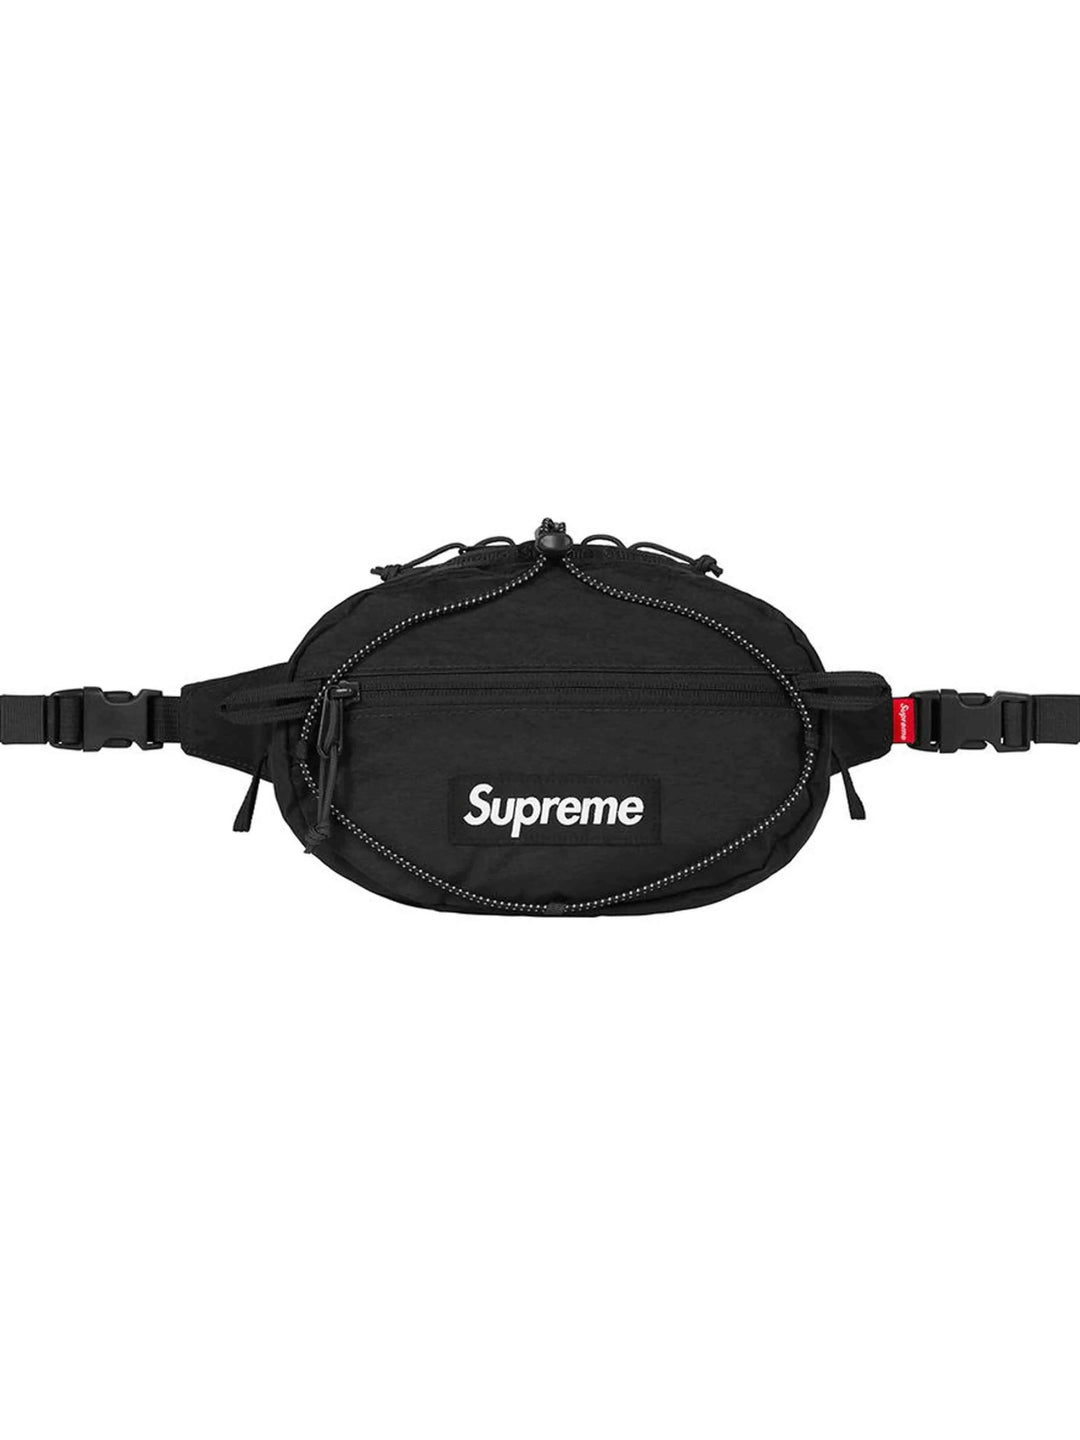 Supreme Waist Bag Black [FW20] Prior